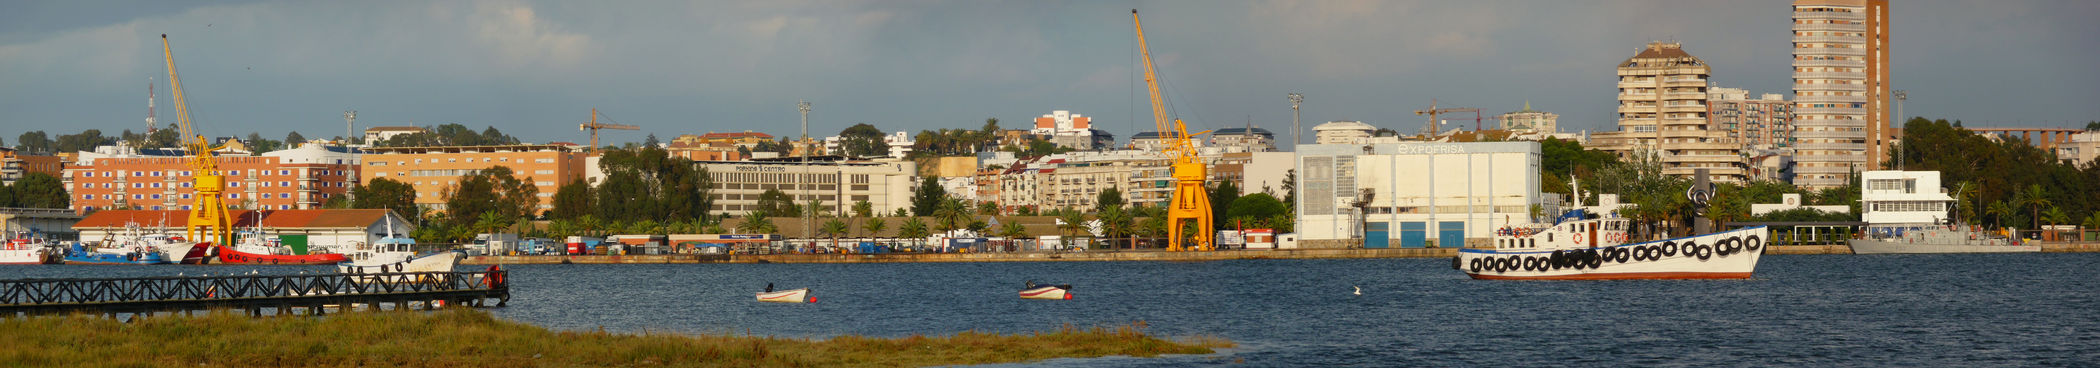 Panorama města Huelva